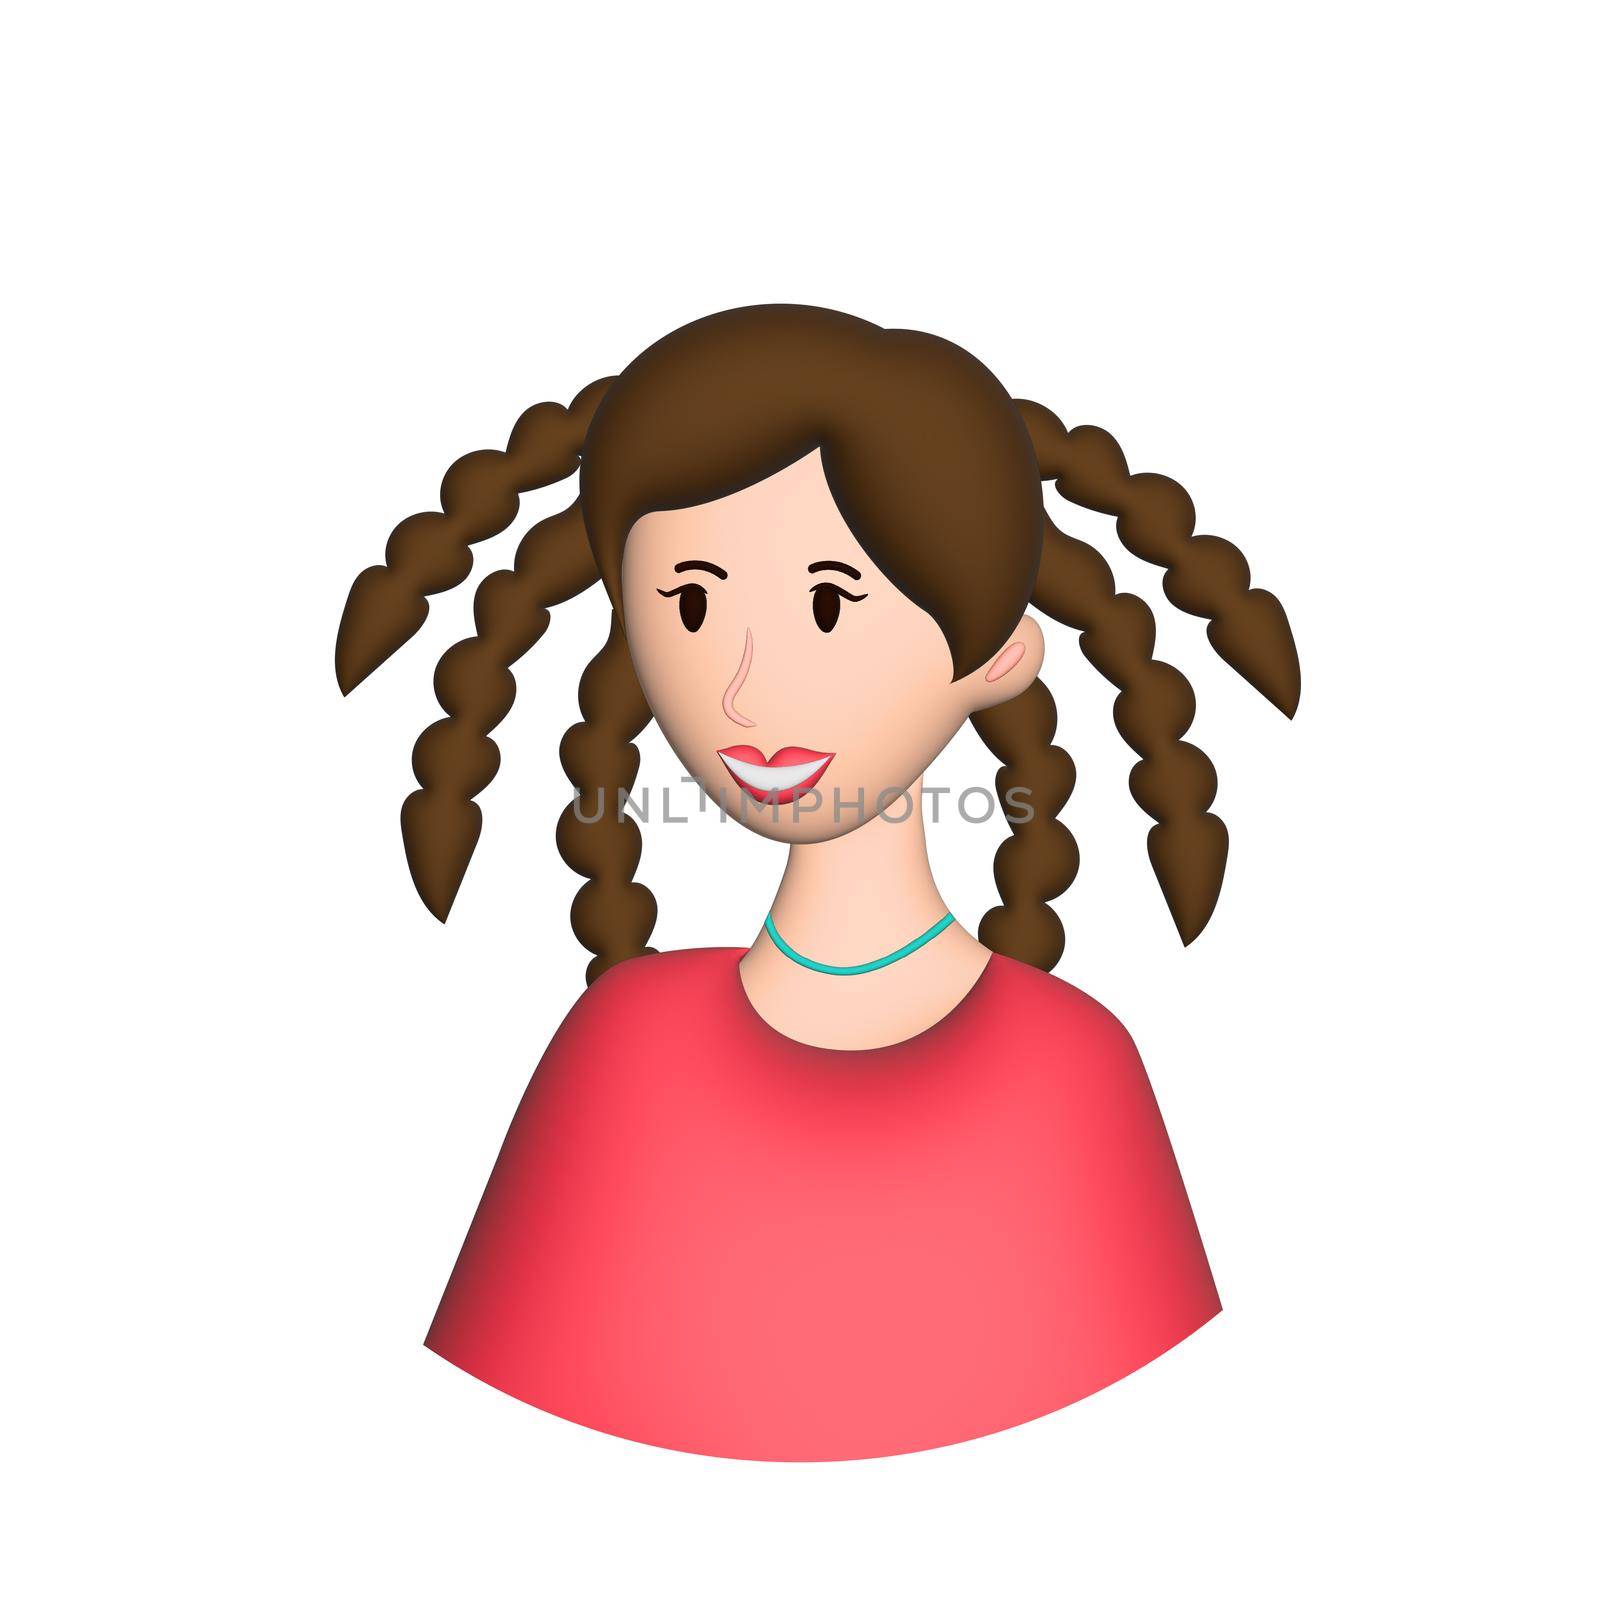 Web icon man, girl with many braids - illustration